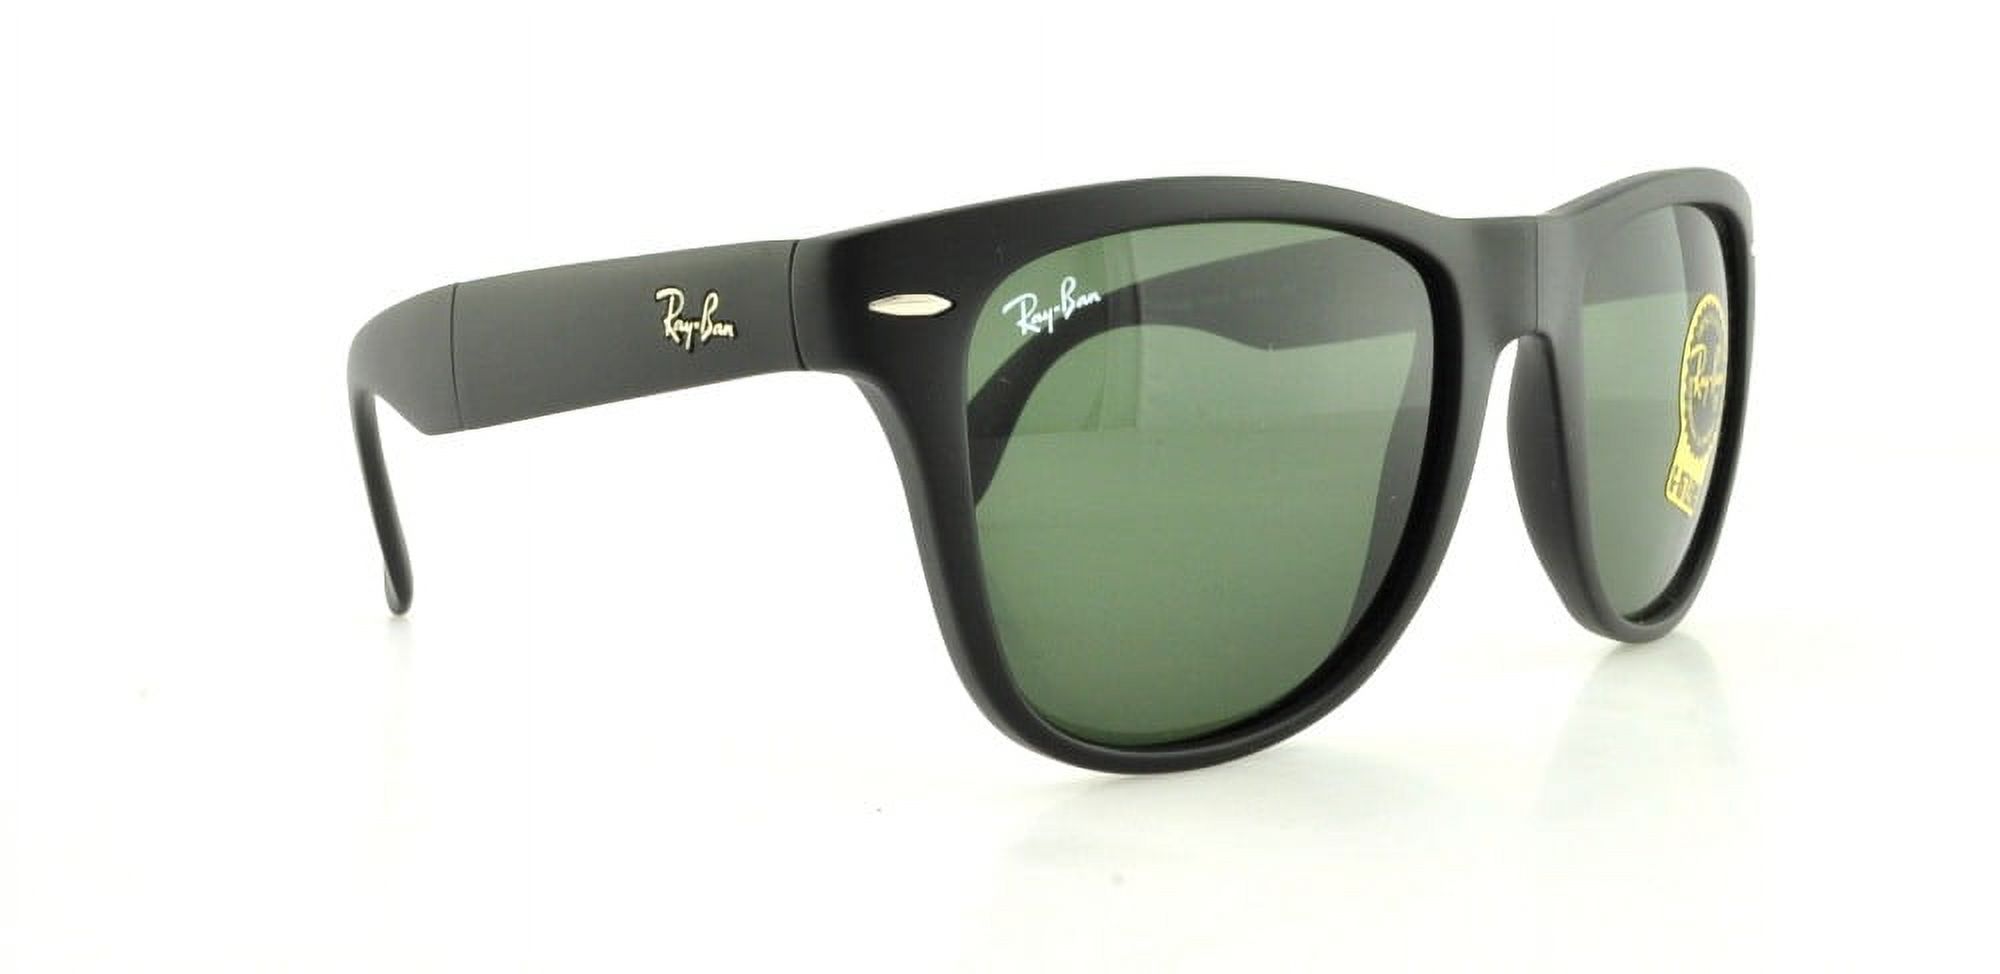 Ray Ban RB 4105 601-S Folding Wayfarer - Black Matte/Green by Ray Ban for Men - 50-22-140 mm Sunglasses - image 2 of 7